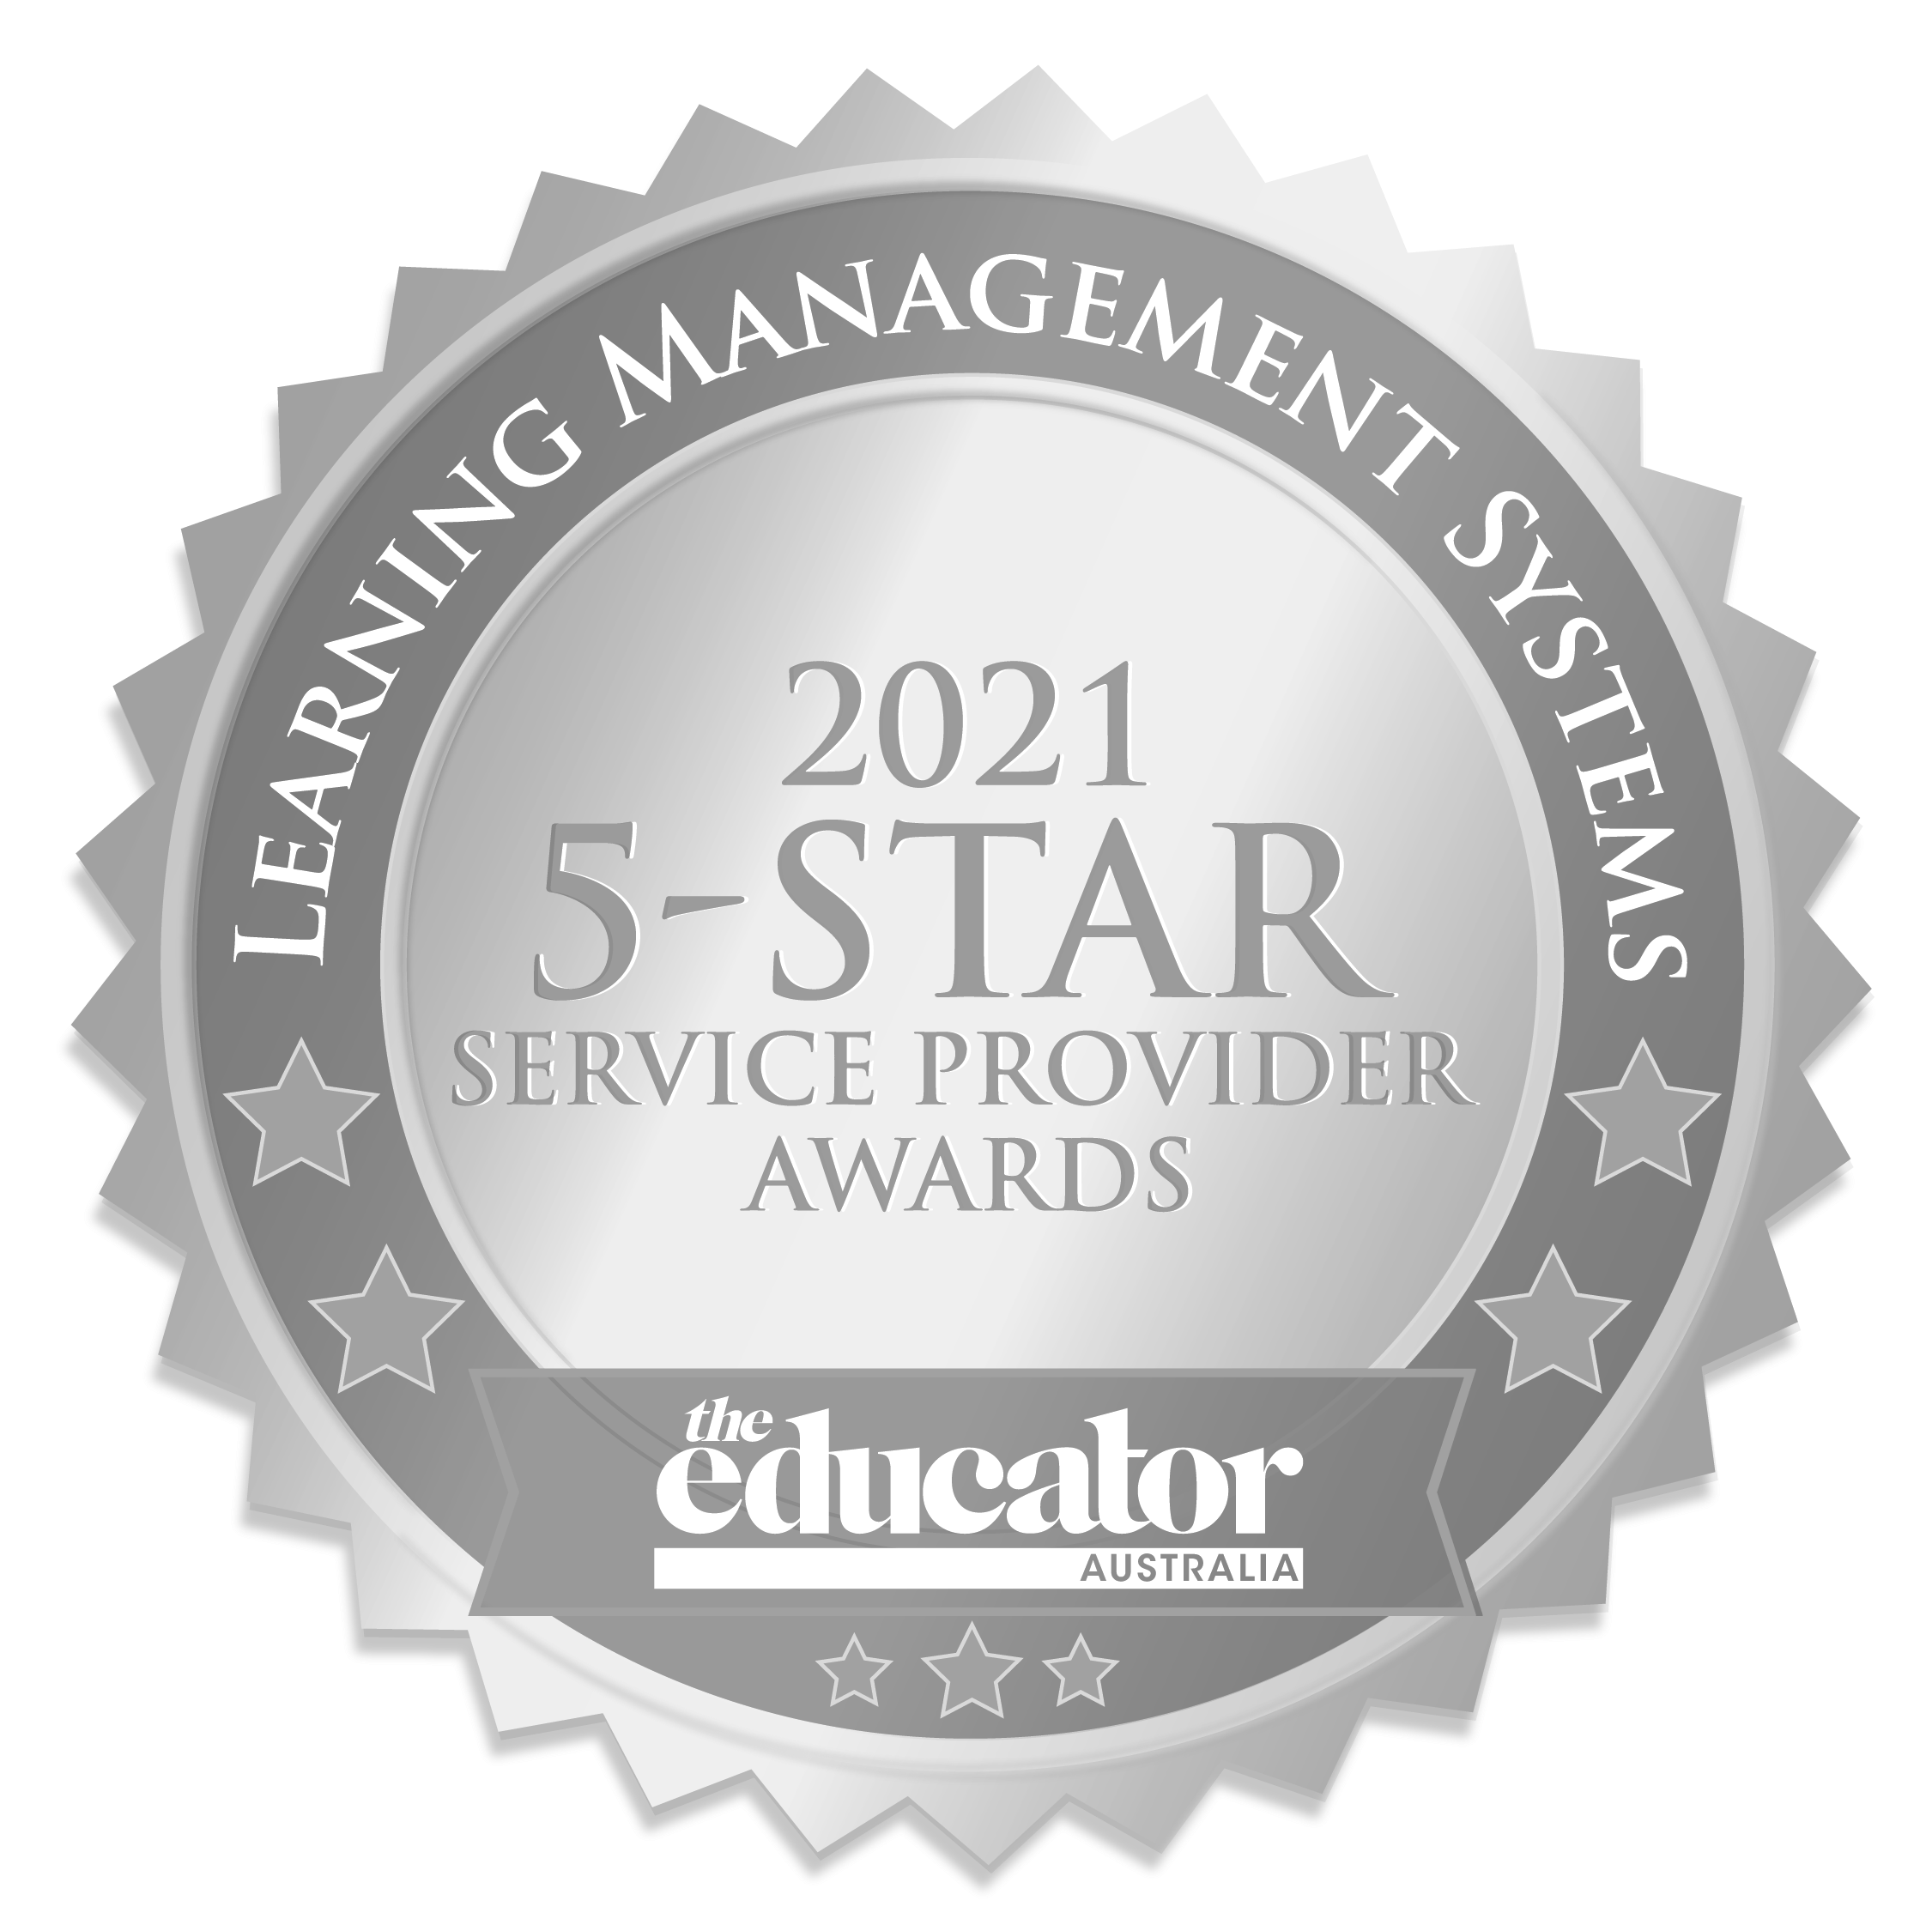 The Educator 2021 / 5-Star Service Provider Awards